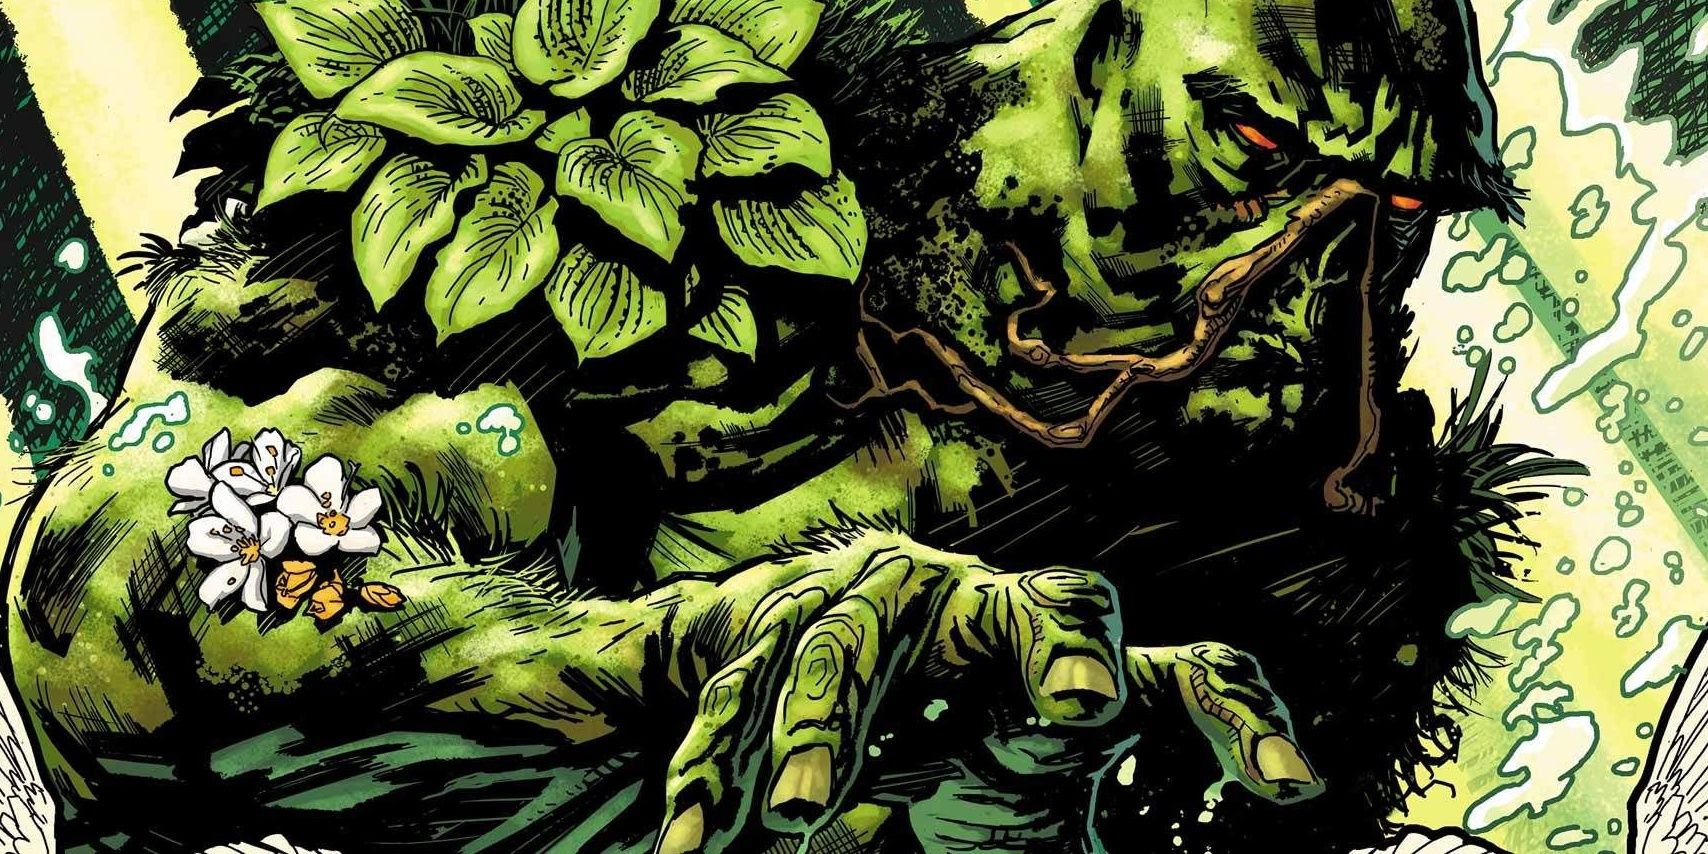 DC Comics' Swamp Thing